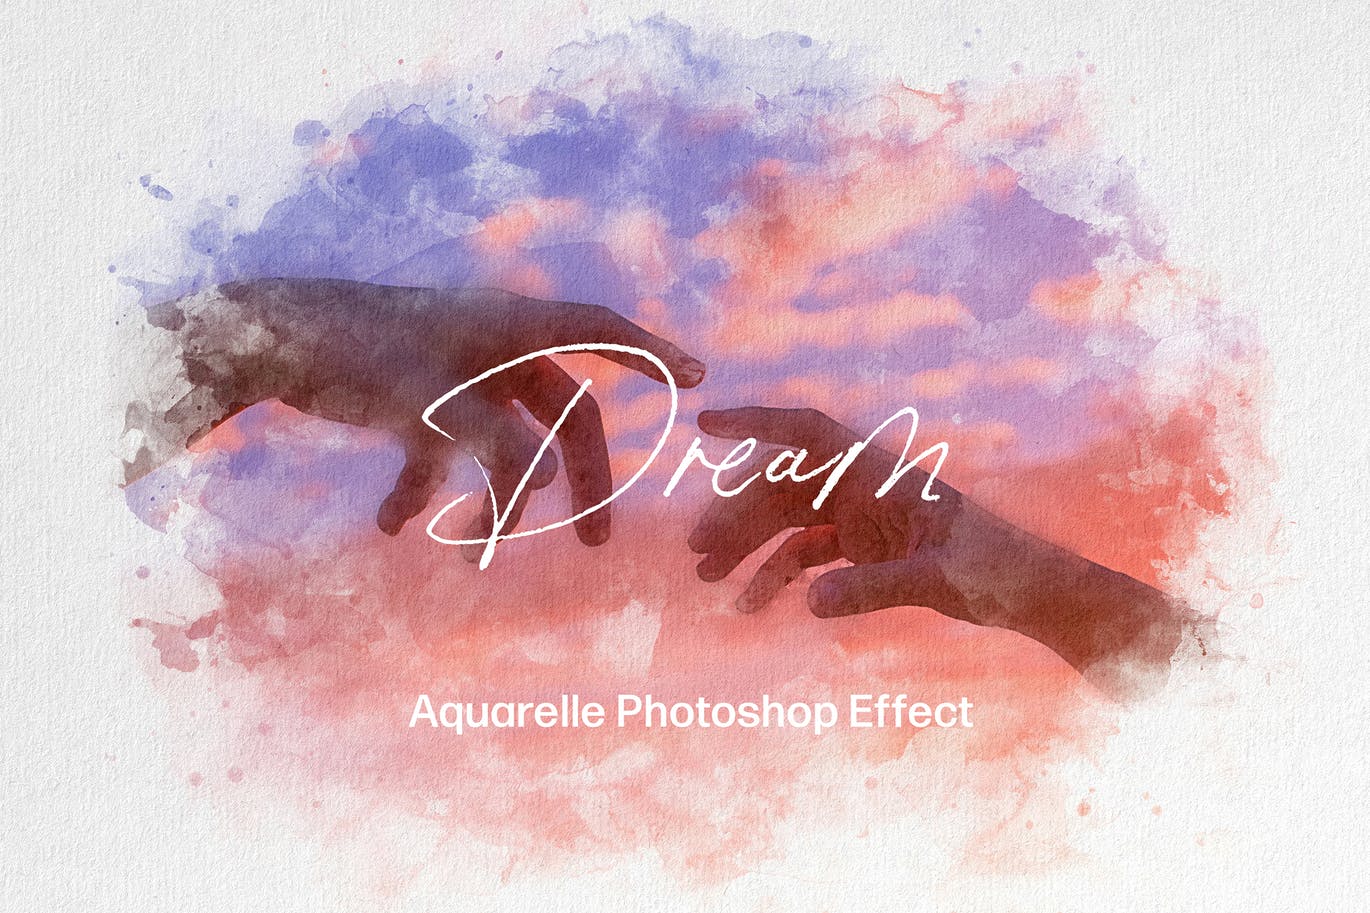 水彩风格PS照片效果模板 Aquarelle Photoshop Effect 插件预设 第2张